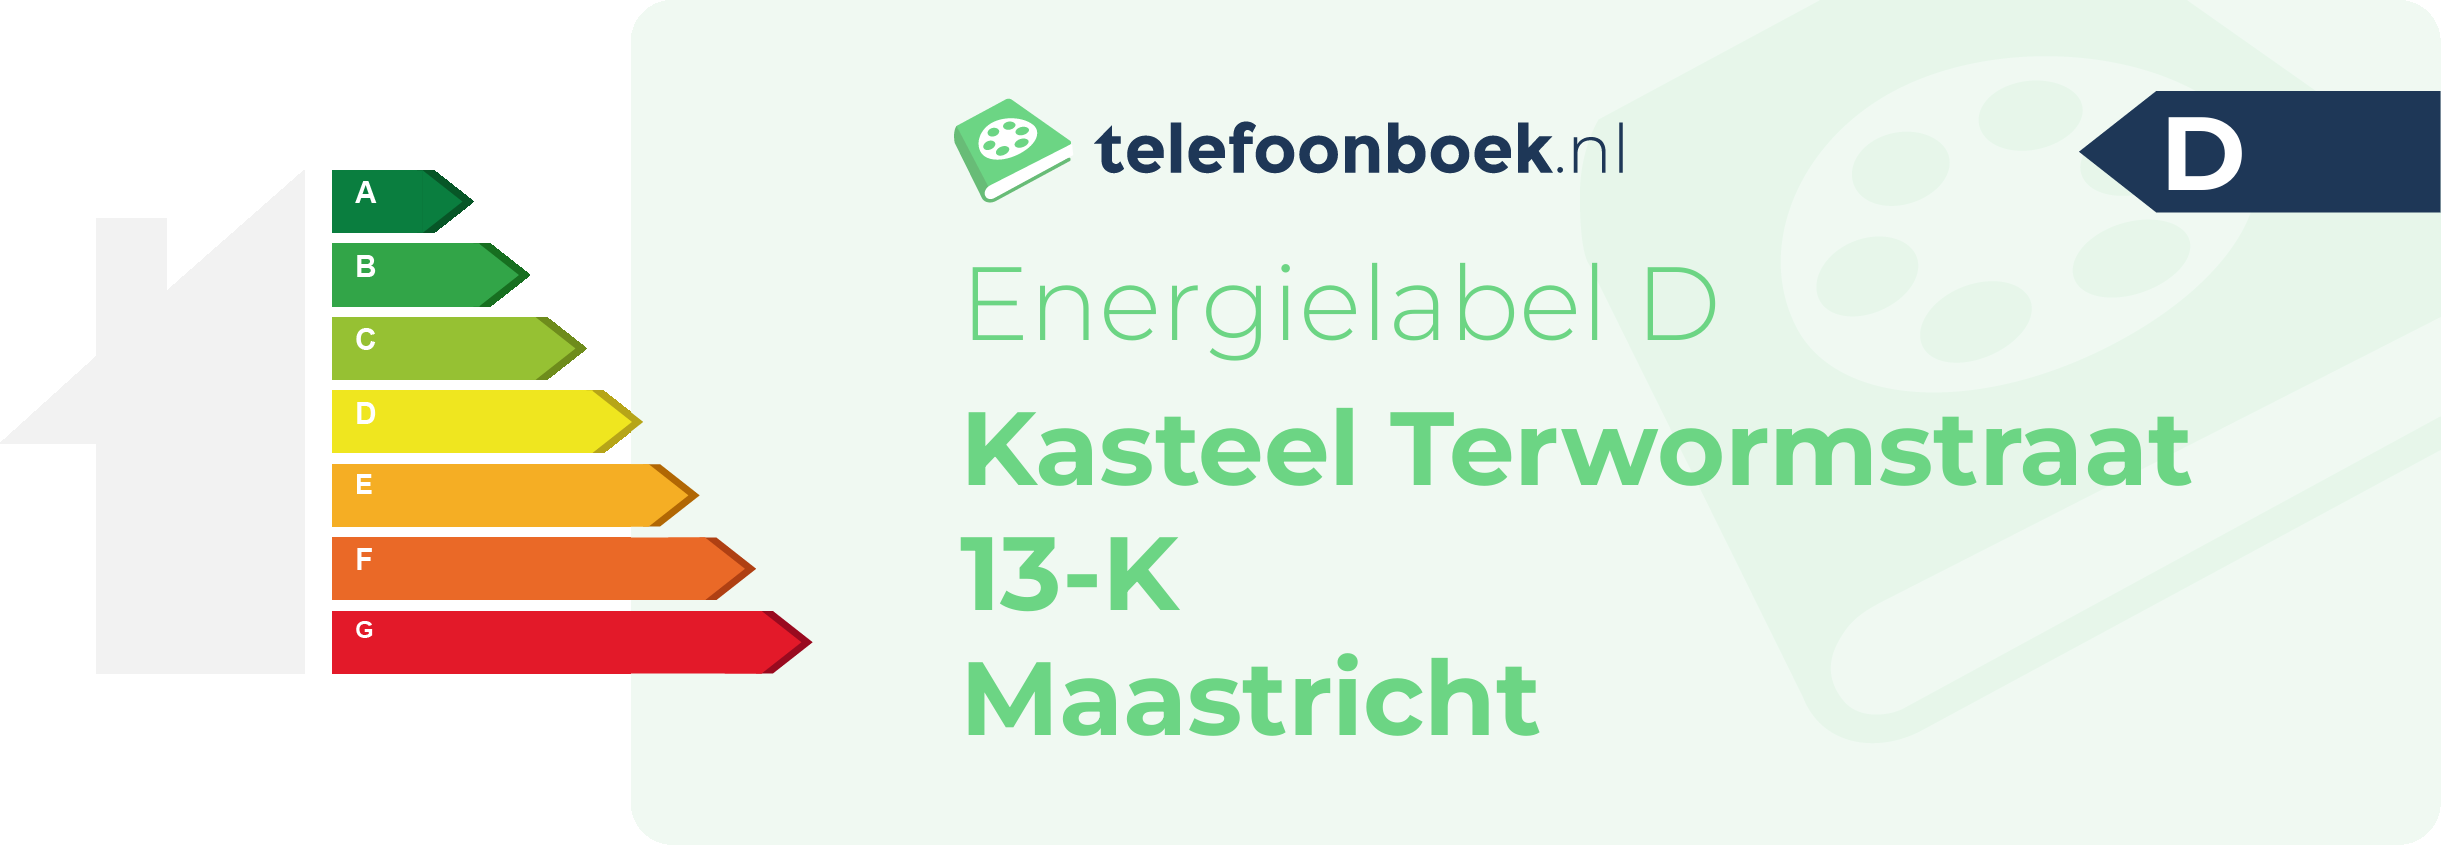 Energielabel Kasteel Terwormstraat 13-K Maastricht